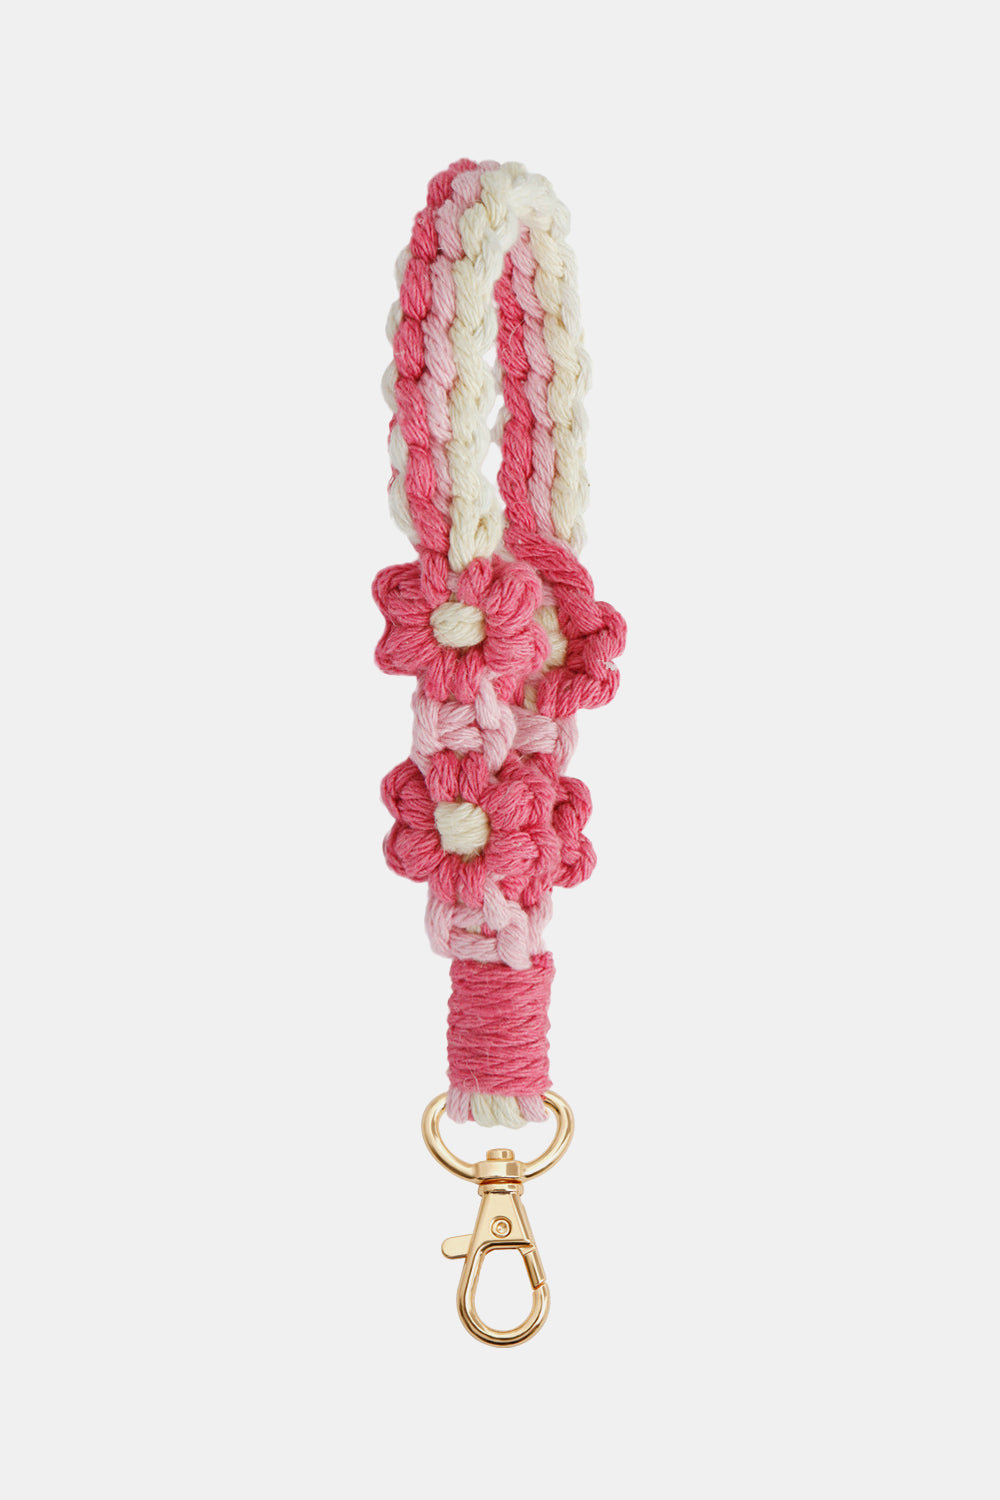 Trendsi Cupid Beauty Supplies Strawberry / One Size Keychains Flower Shape Wristlet Zinc Alloy Closure Macrame Key Chain